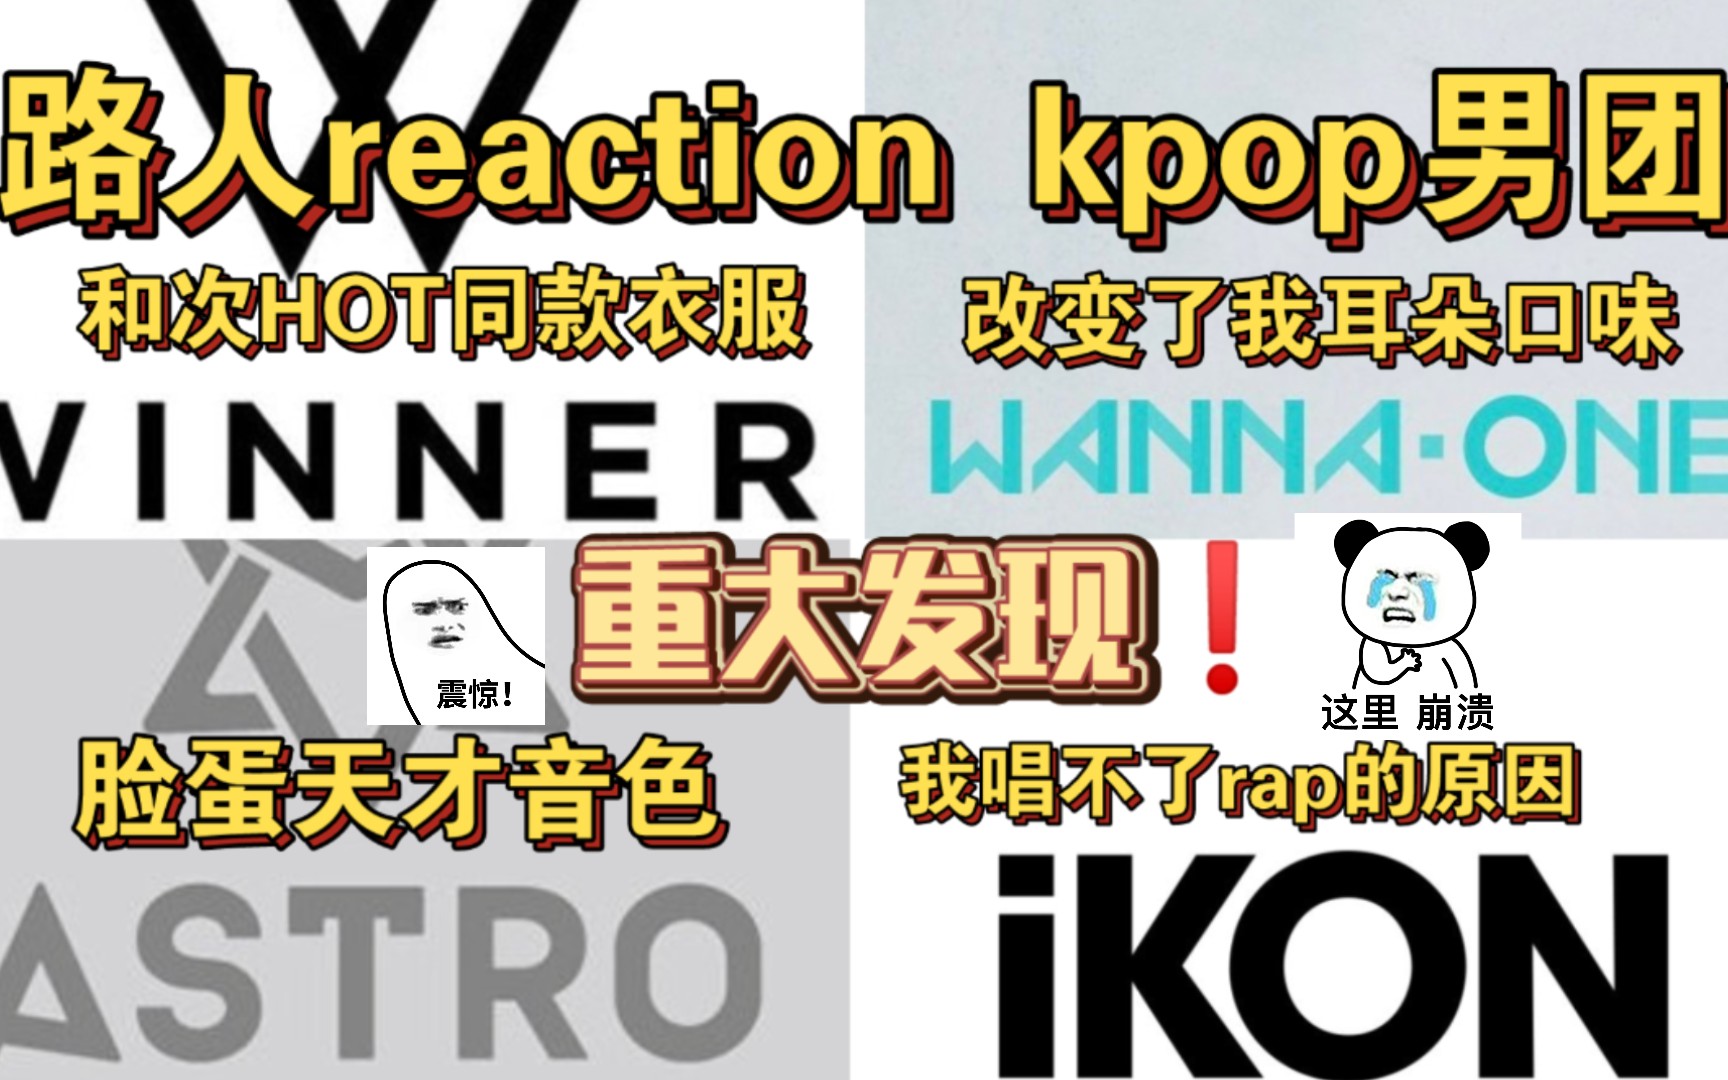 【kpop男团】reaction(下)路人来看winner wanna·one Astro ikon